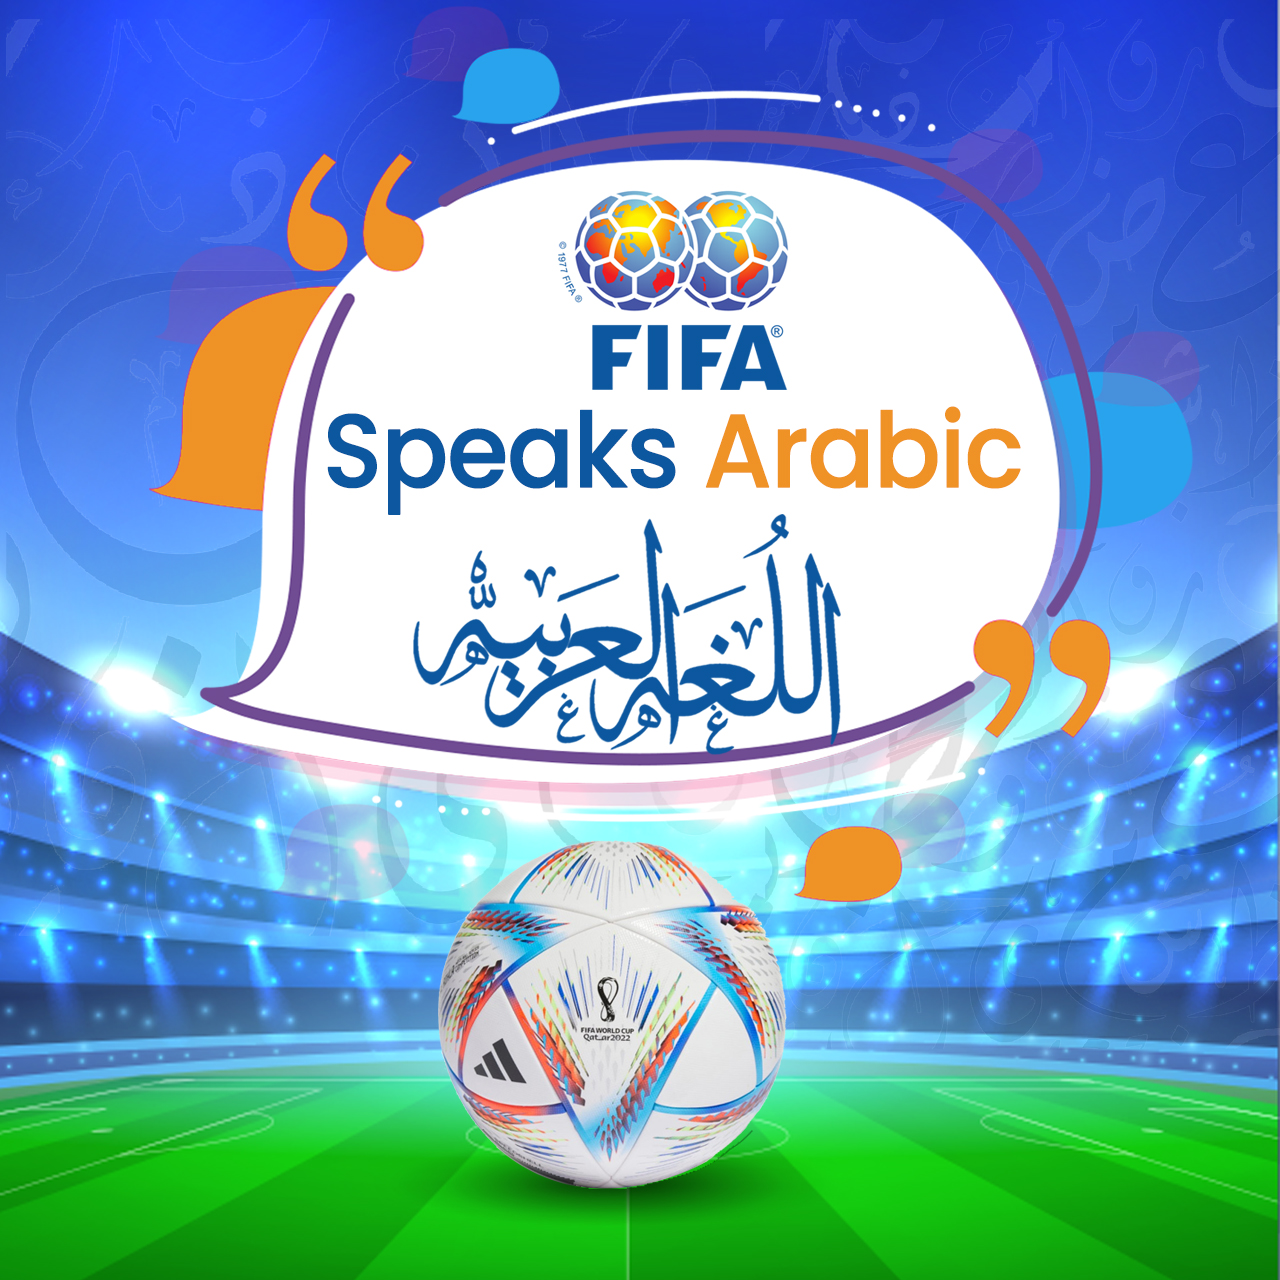 FIFA speaks Arabic 2